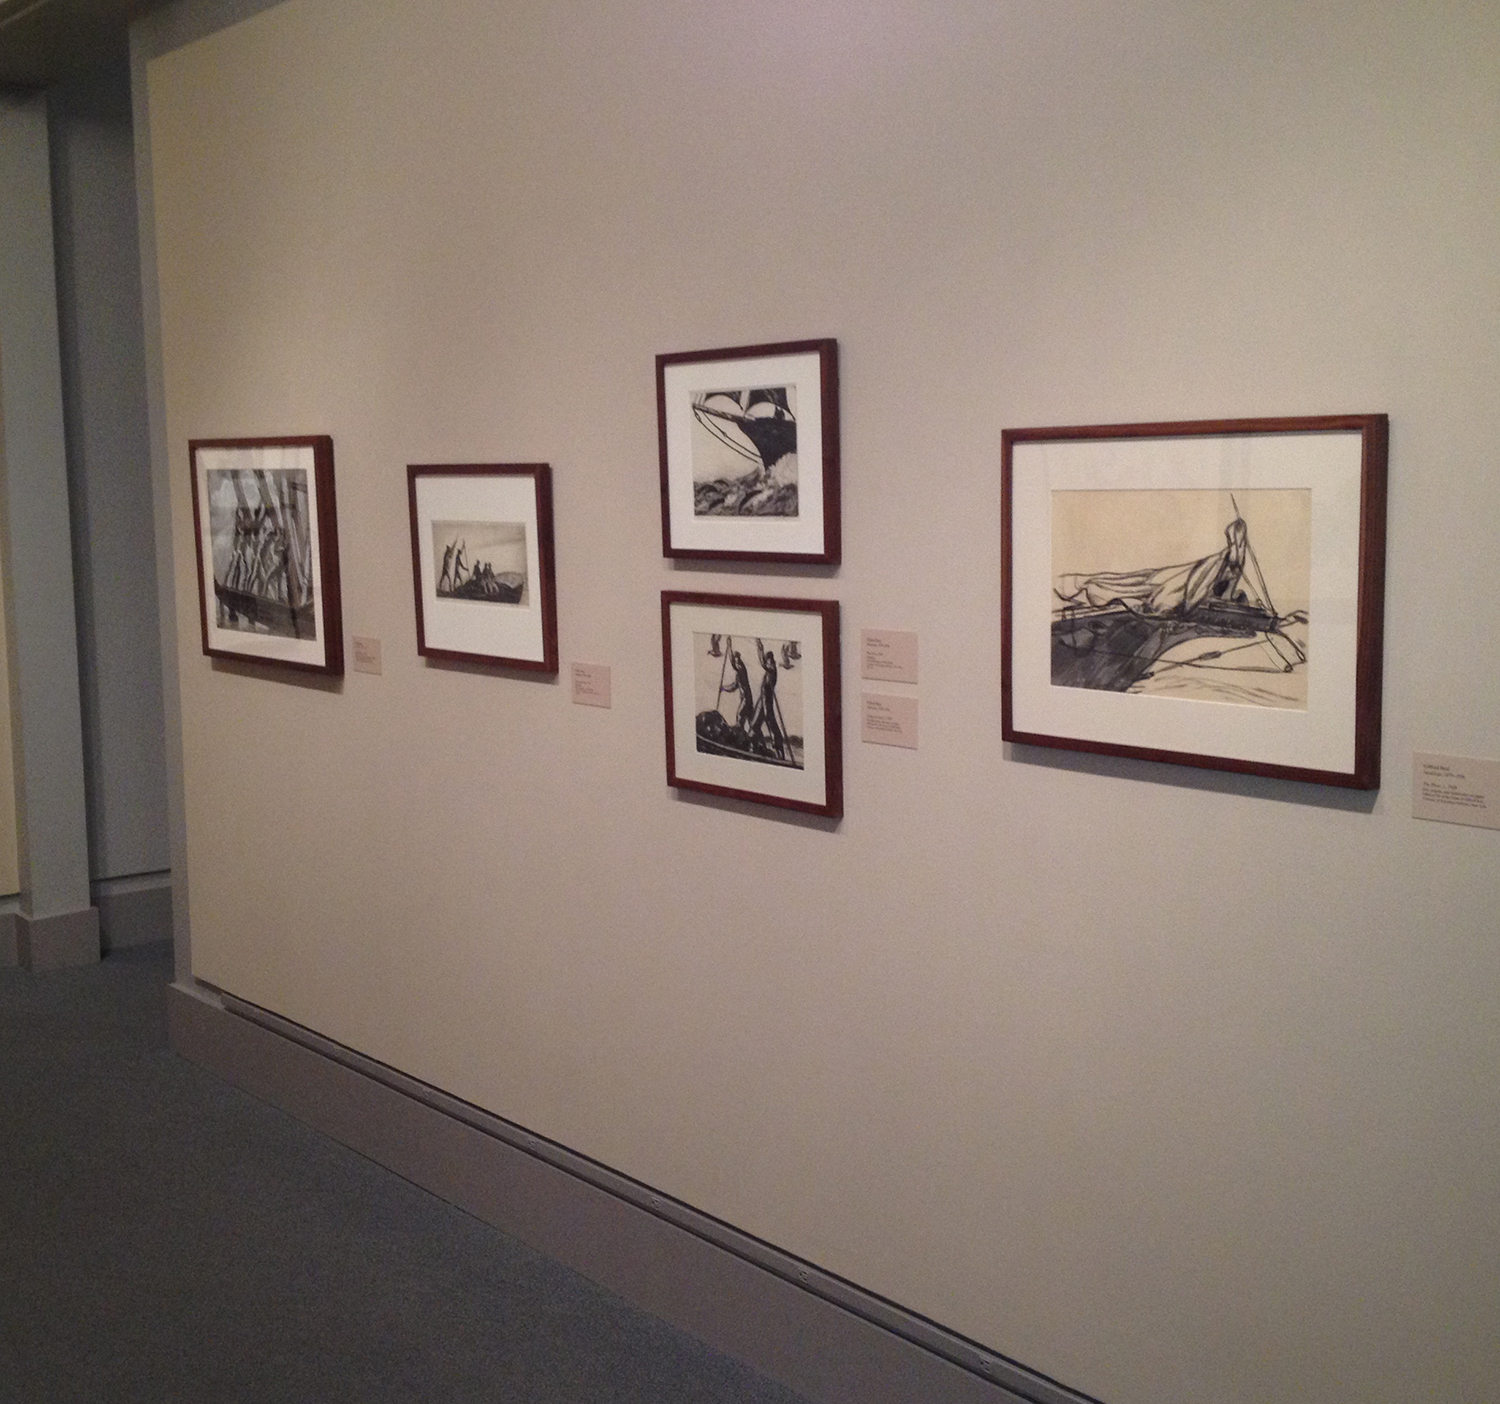 Installation photos of Gifford Beal's framed art